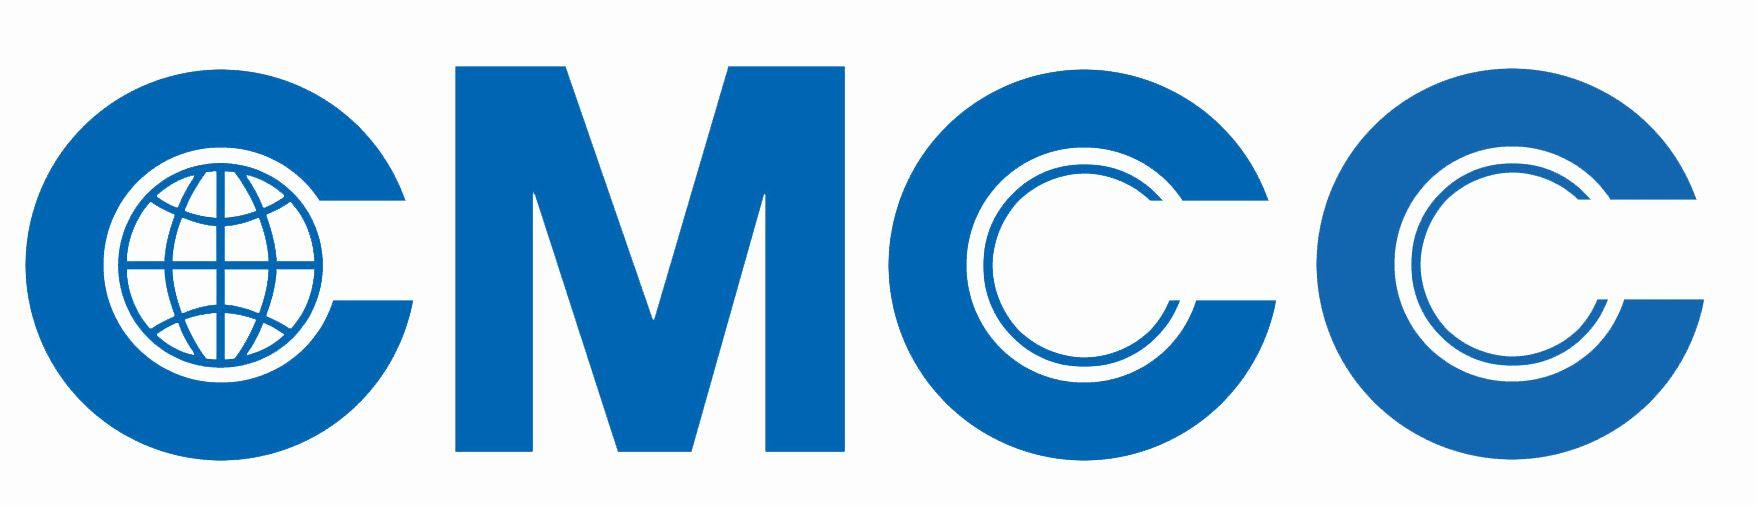 CMCC Logo - CMCC的logo_图片_互动百科